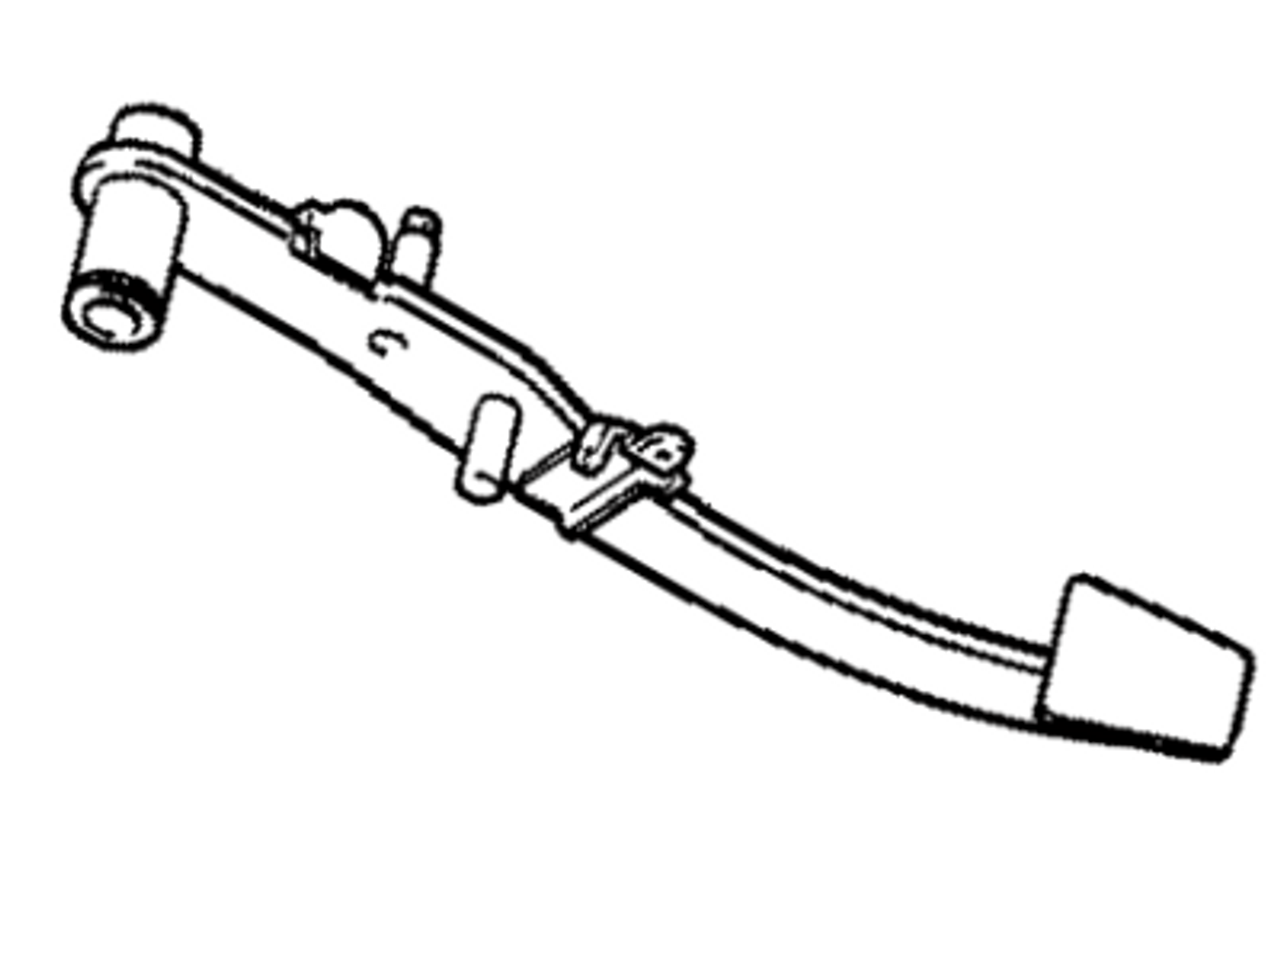 Clutch Pedal- Toyota Tacoma OEM Clutch Pedal (2005-2020) 31311-04020

